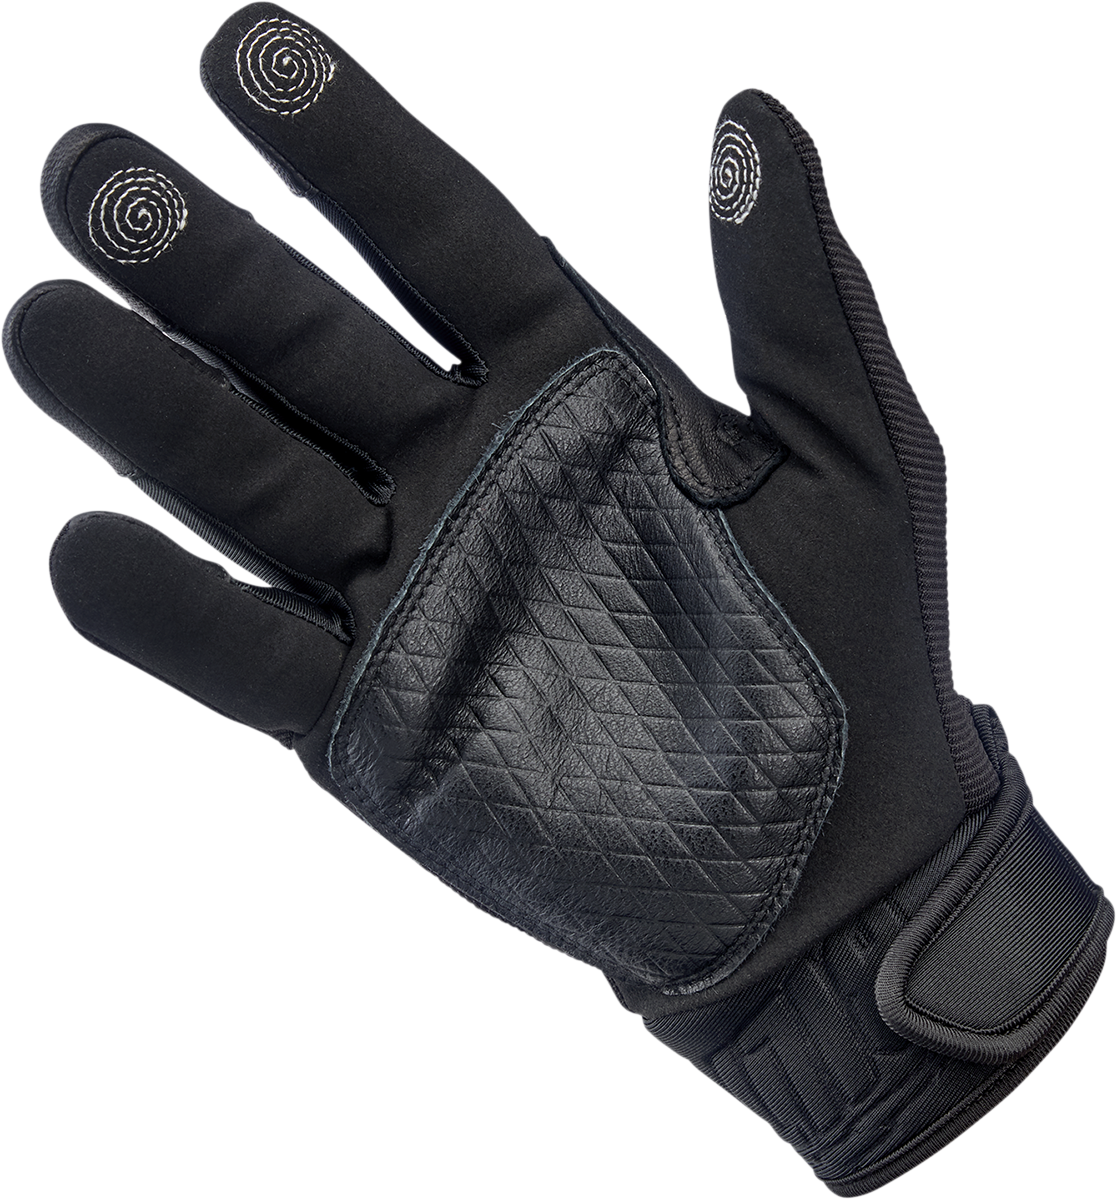 BILTWELL Baja Gloves - Black Out - Medium 1508-0101-303